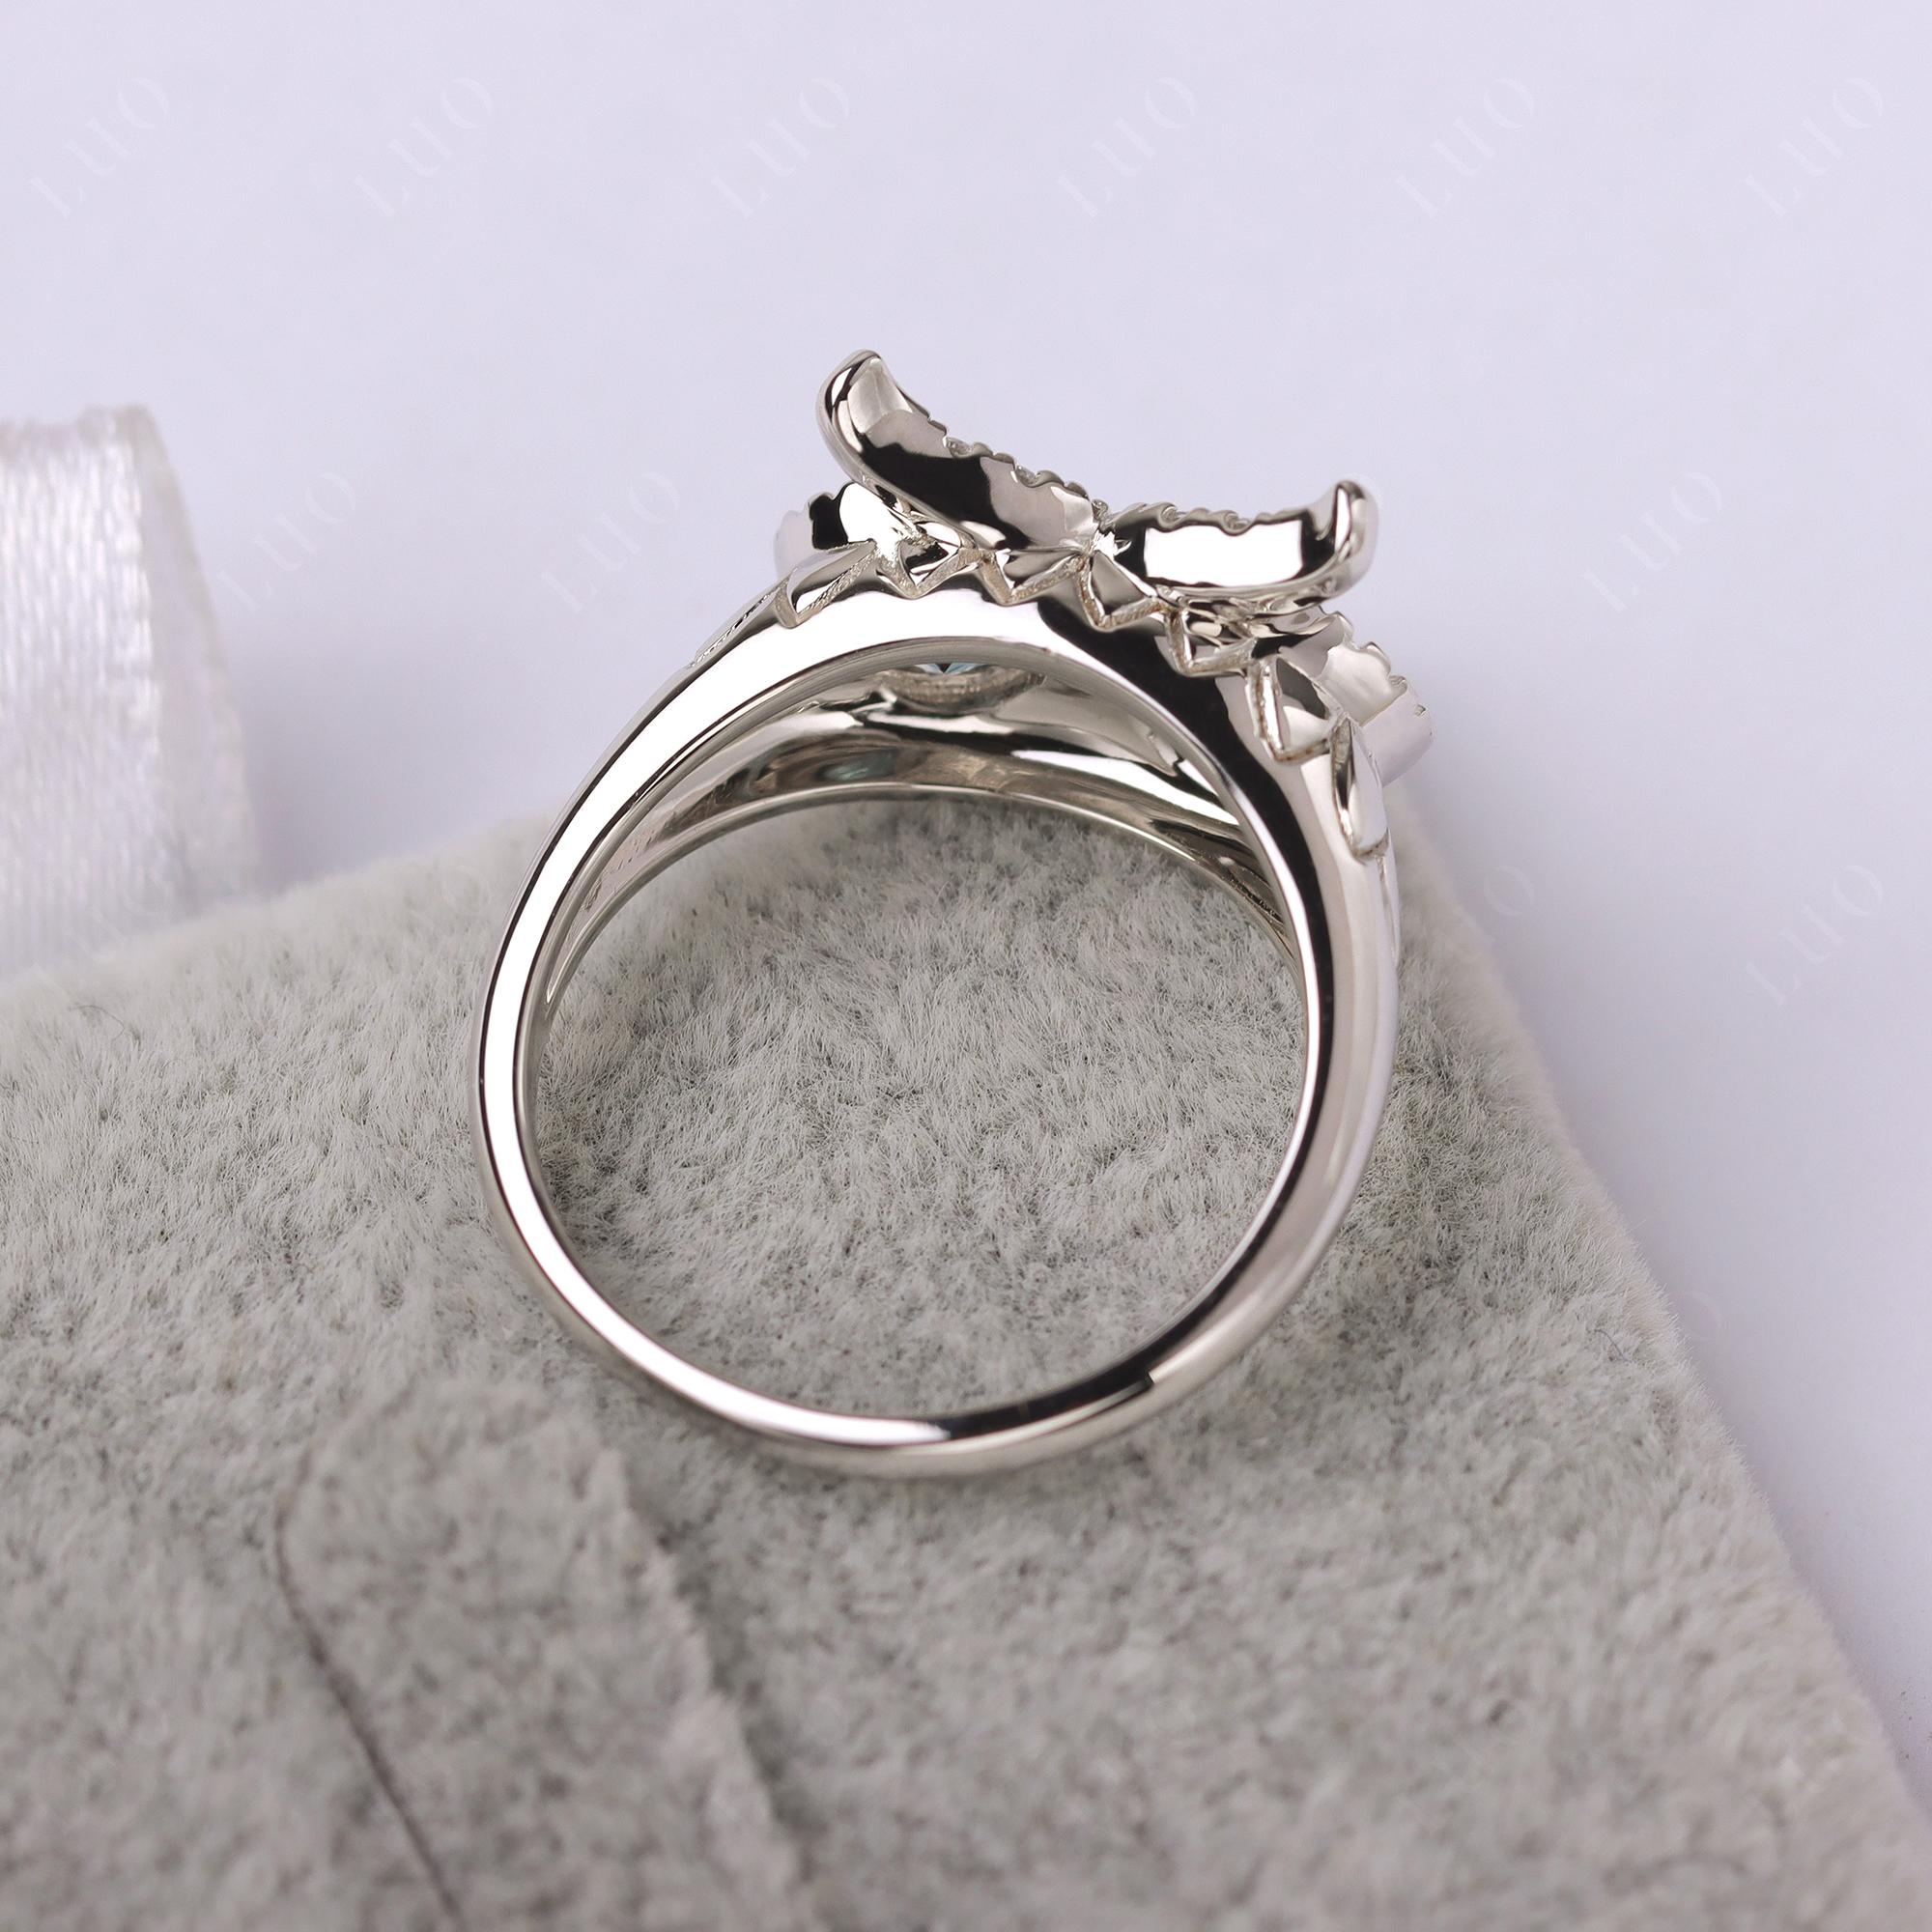 Alexandrite Owl Ring - LUO Jewelry